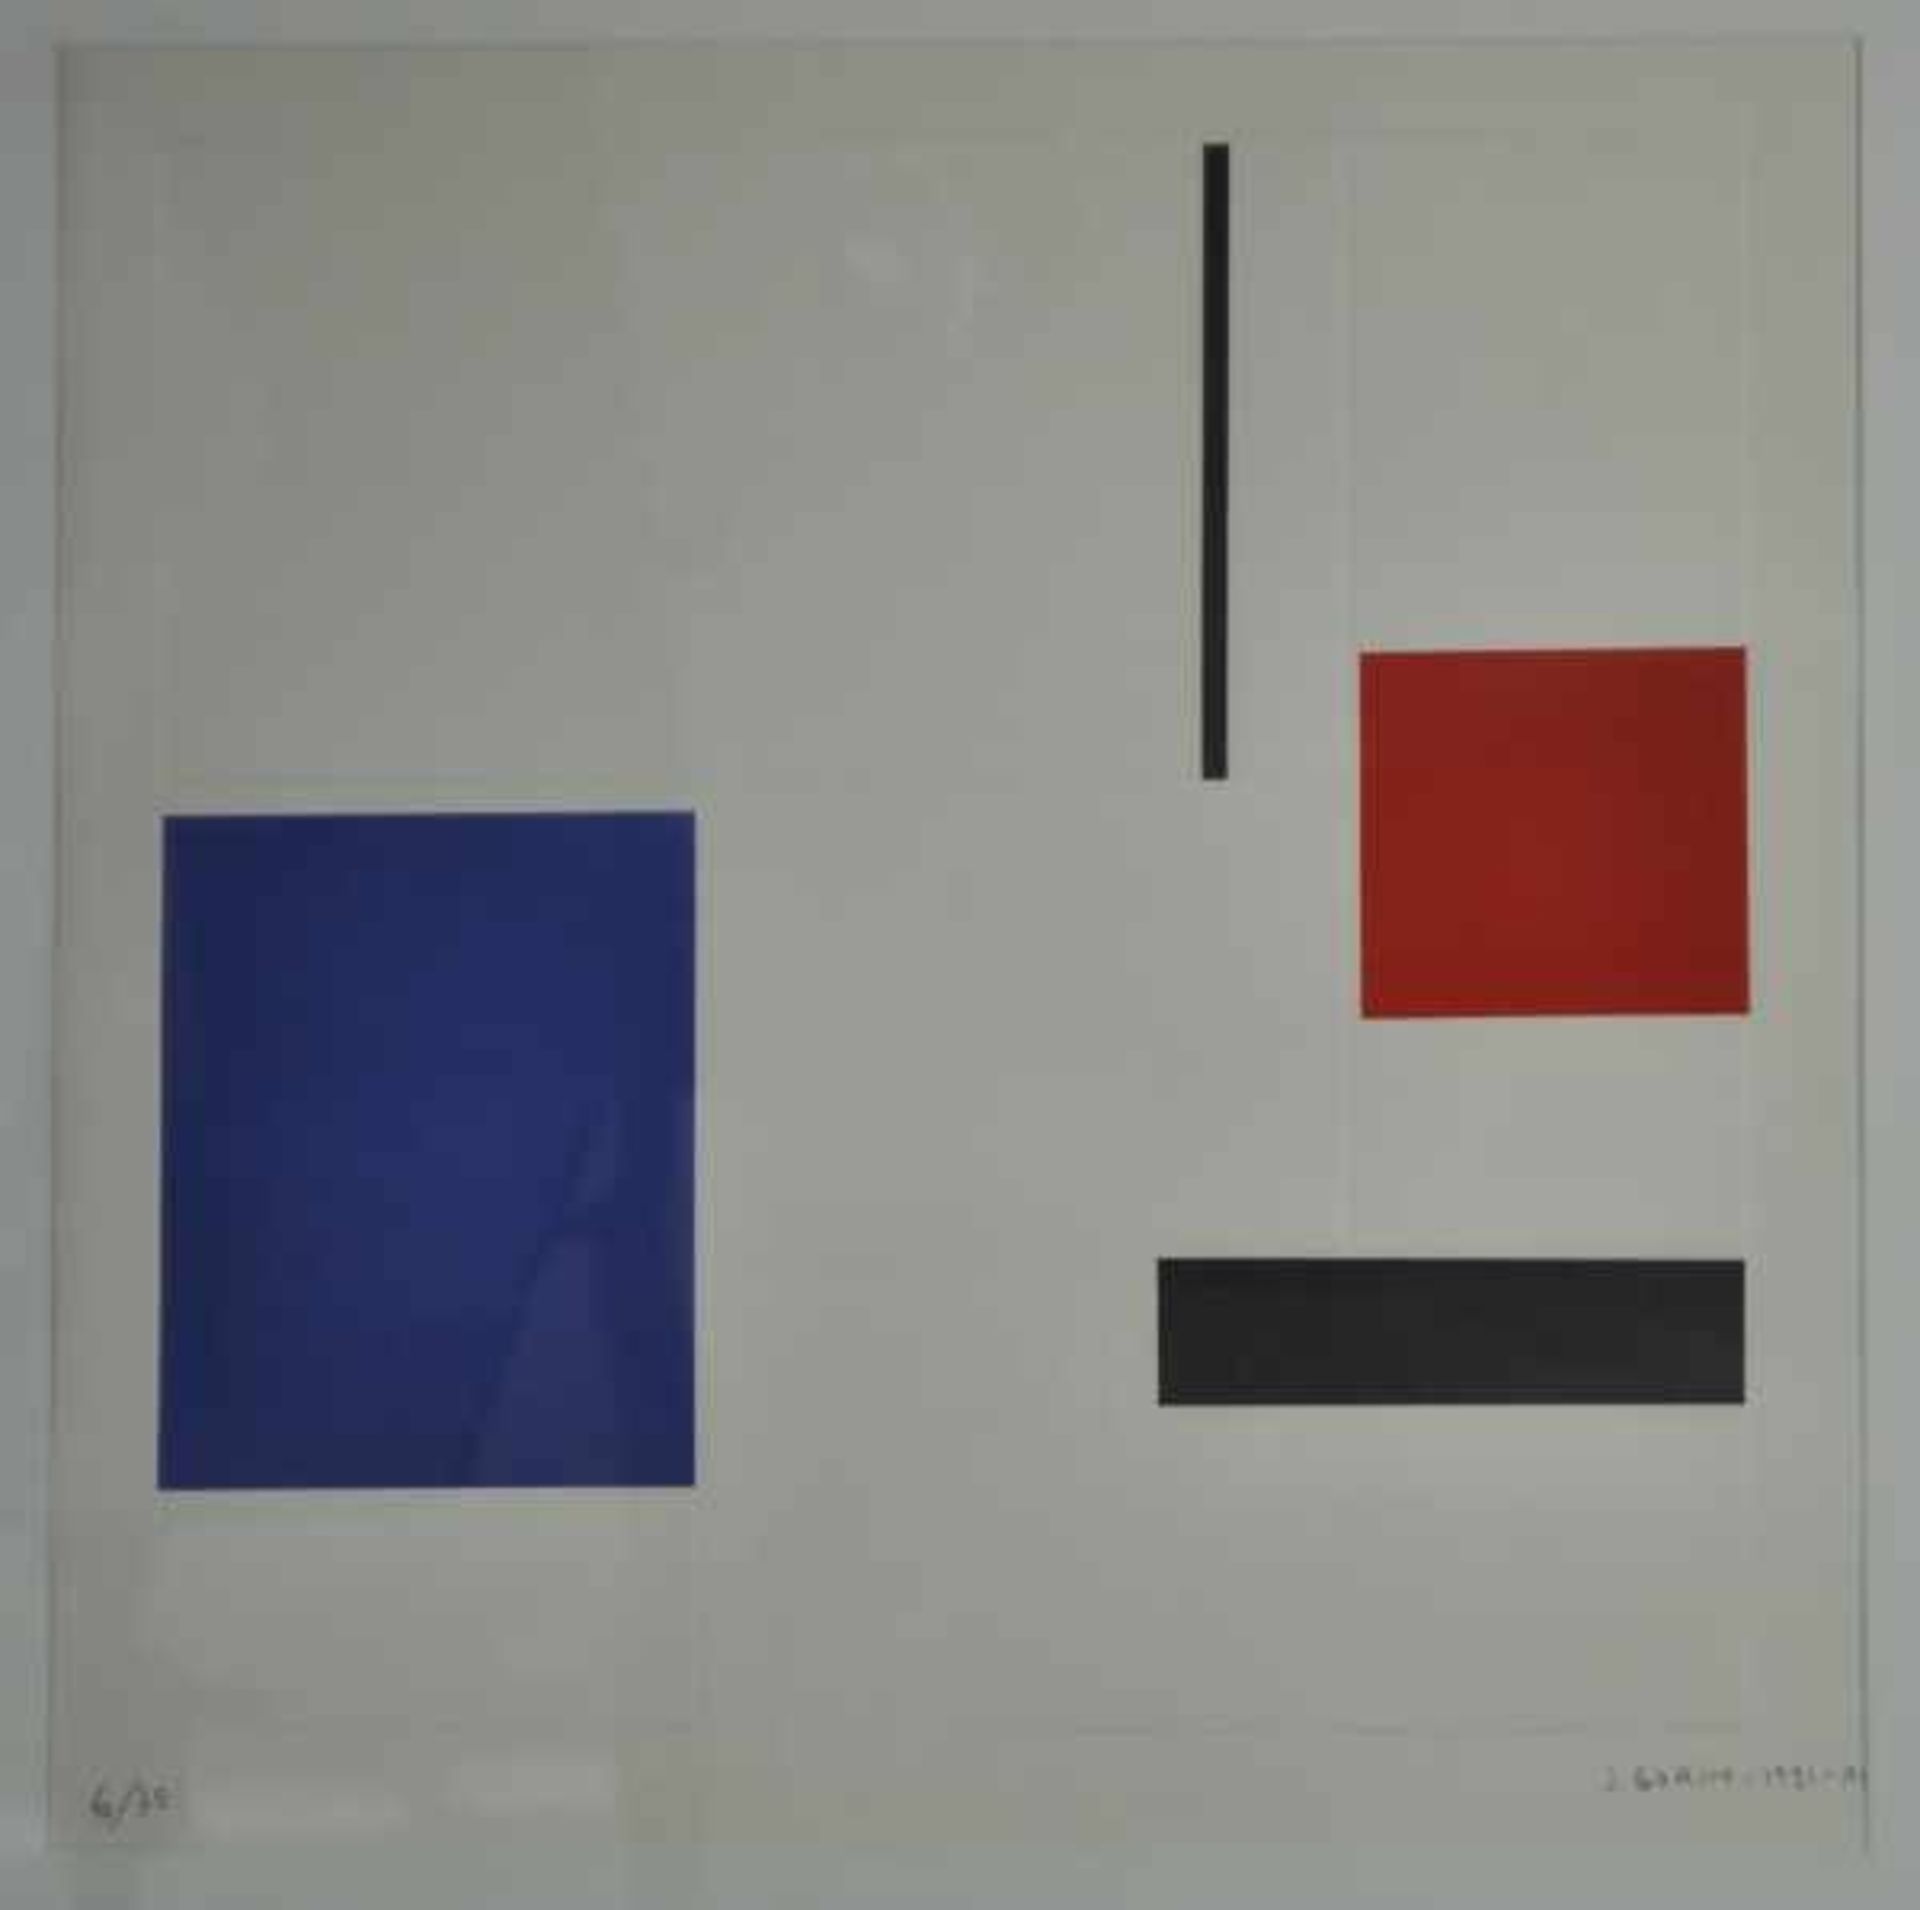 GORIN Albert Jean (1899 Saint-Émilien-de-Blain - 1981 Niort) "Abstrakte Komposition", in Schwarz/Rot